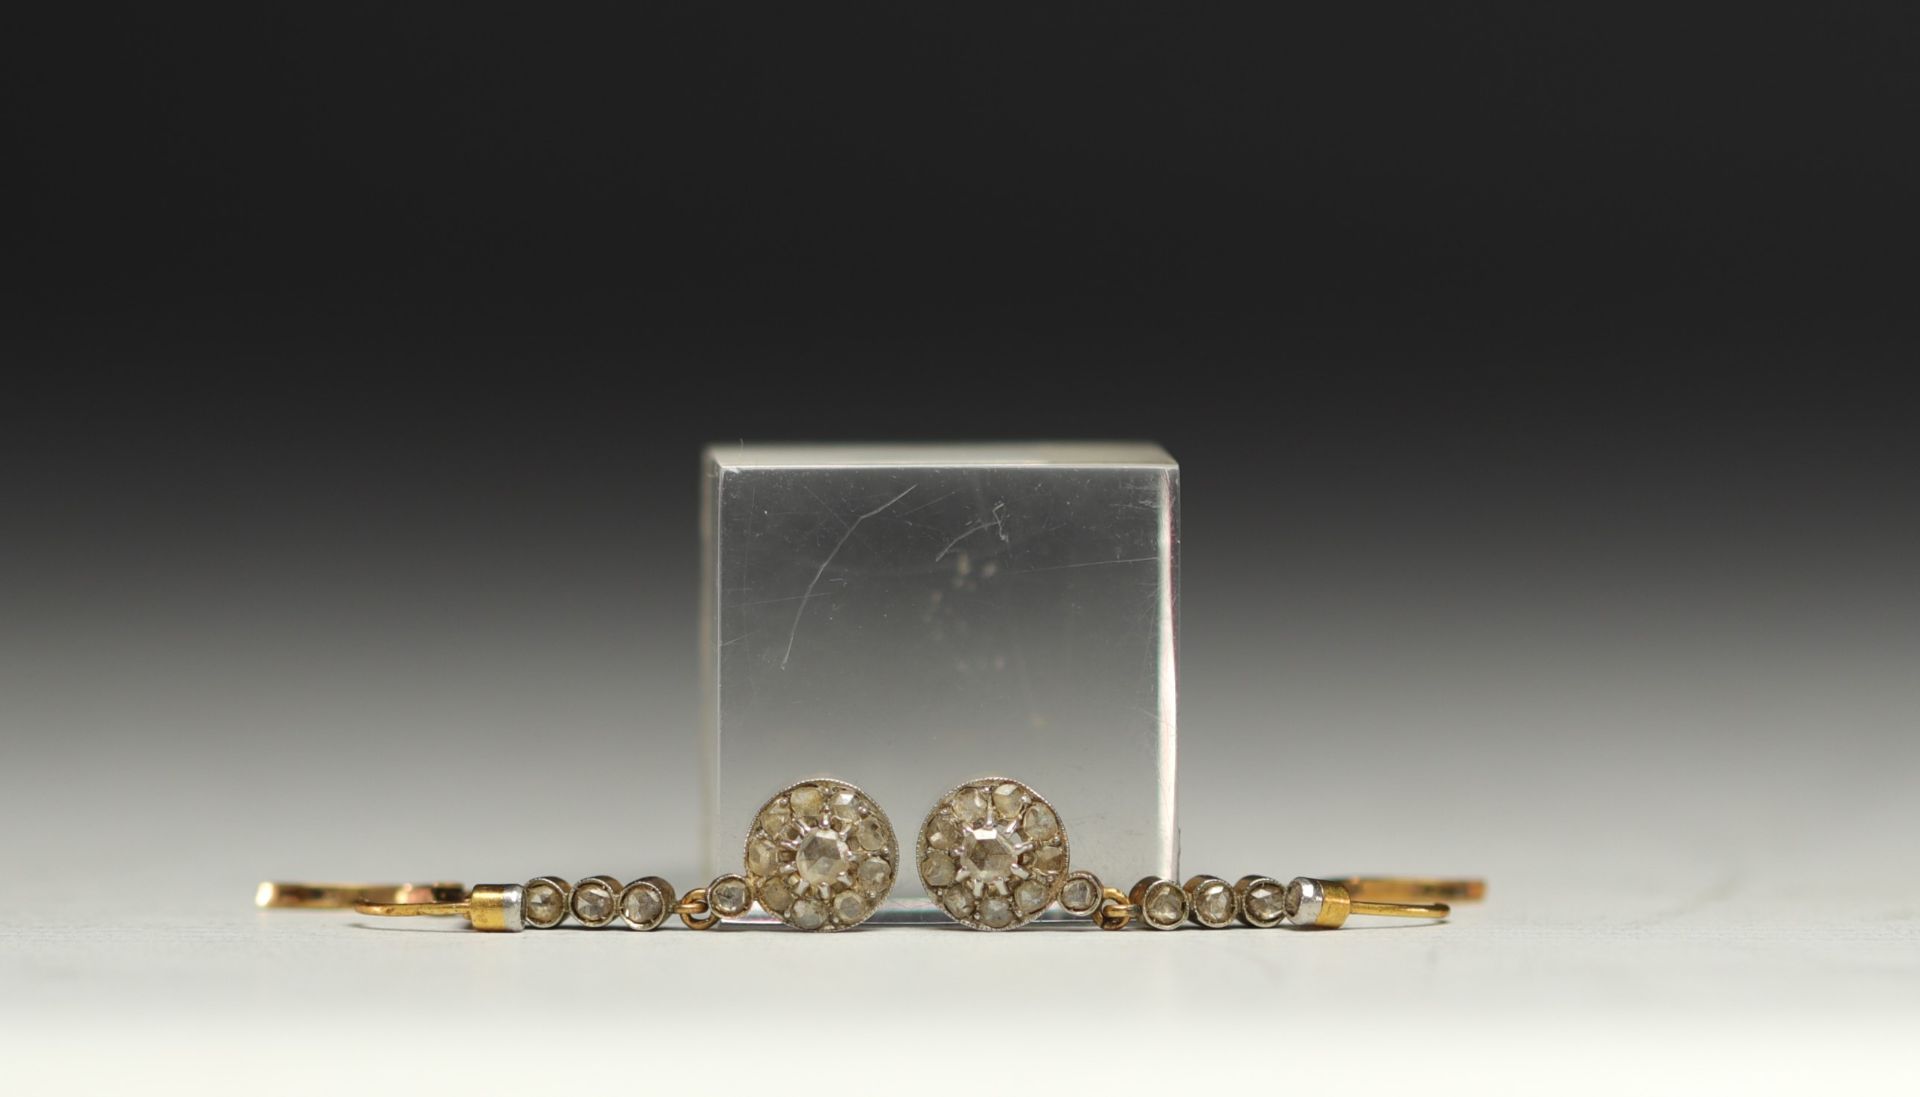 Pair of earrings in 18k gold and rose-cut diamonds.